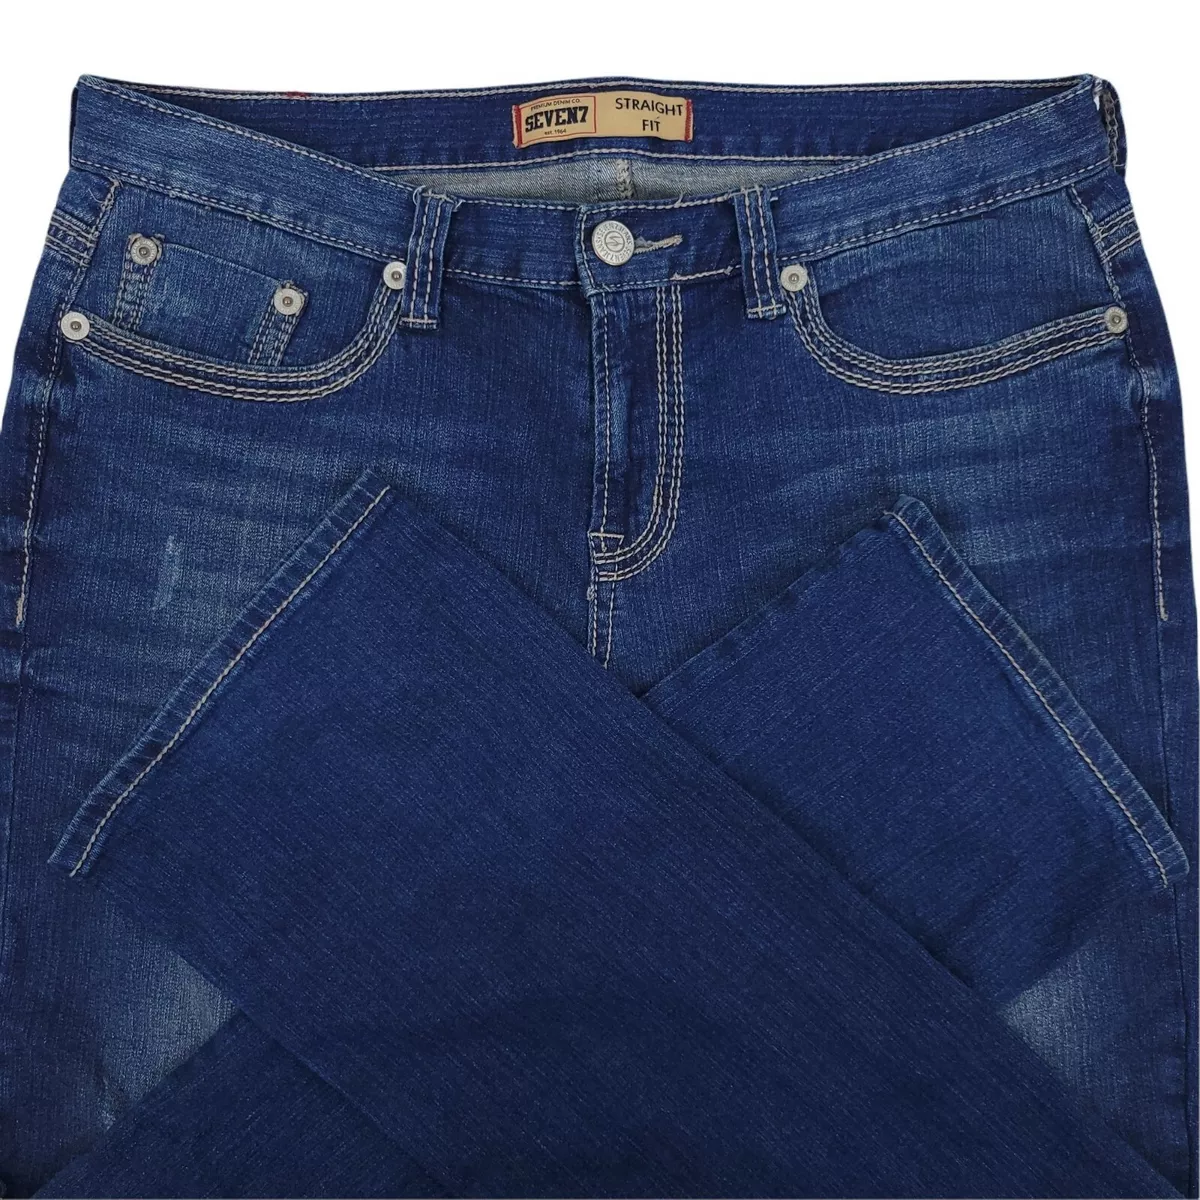 Mens Seven7 Jeans Straight Fit Size 36 x 34 Dark Wash Blue Denim Flap  Pockets